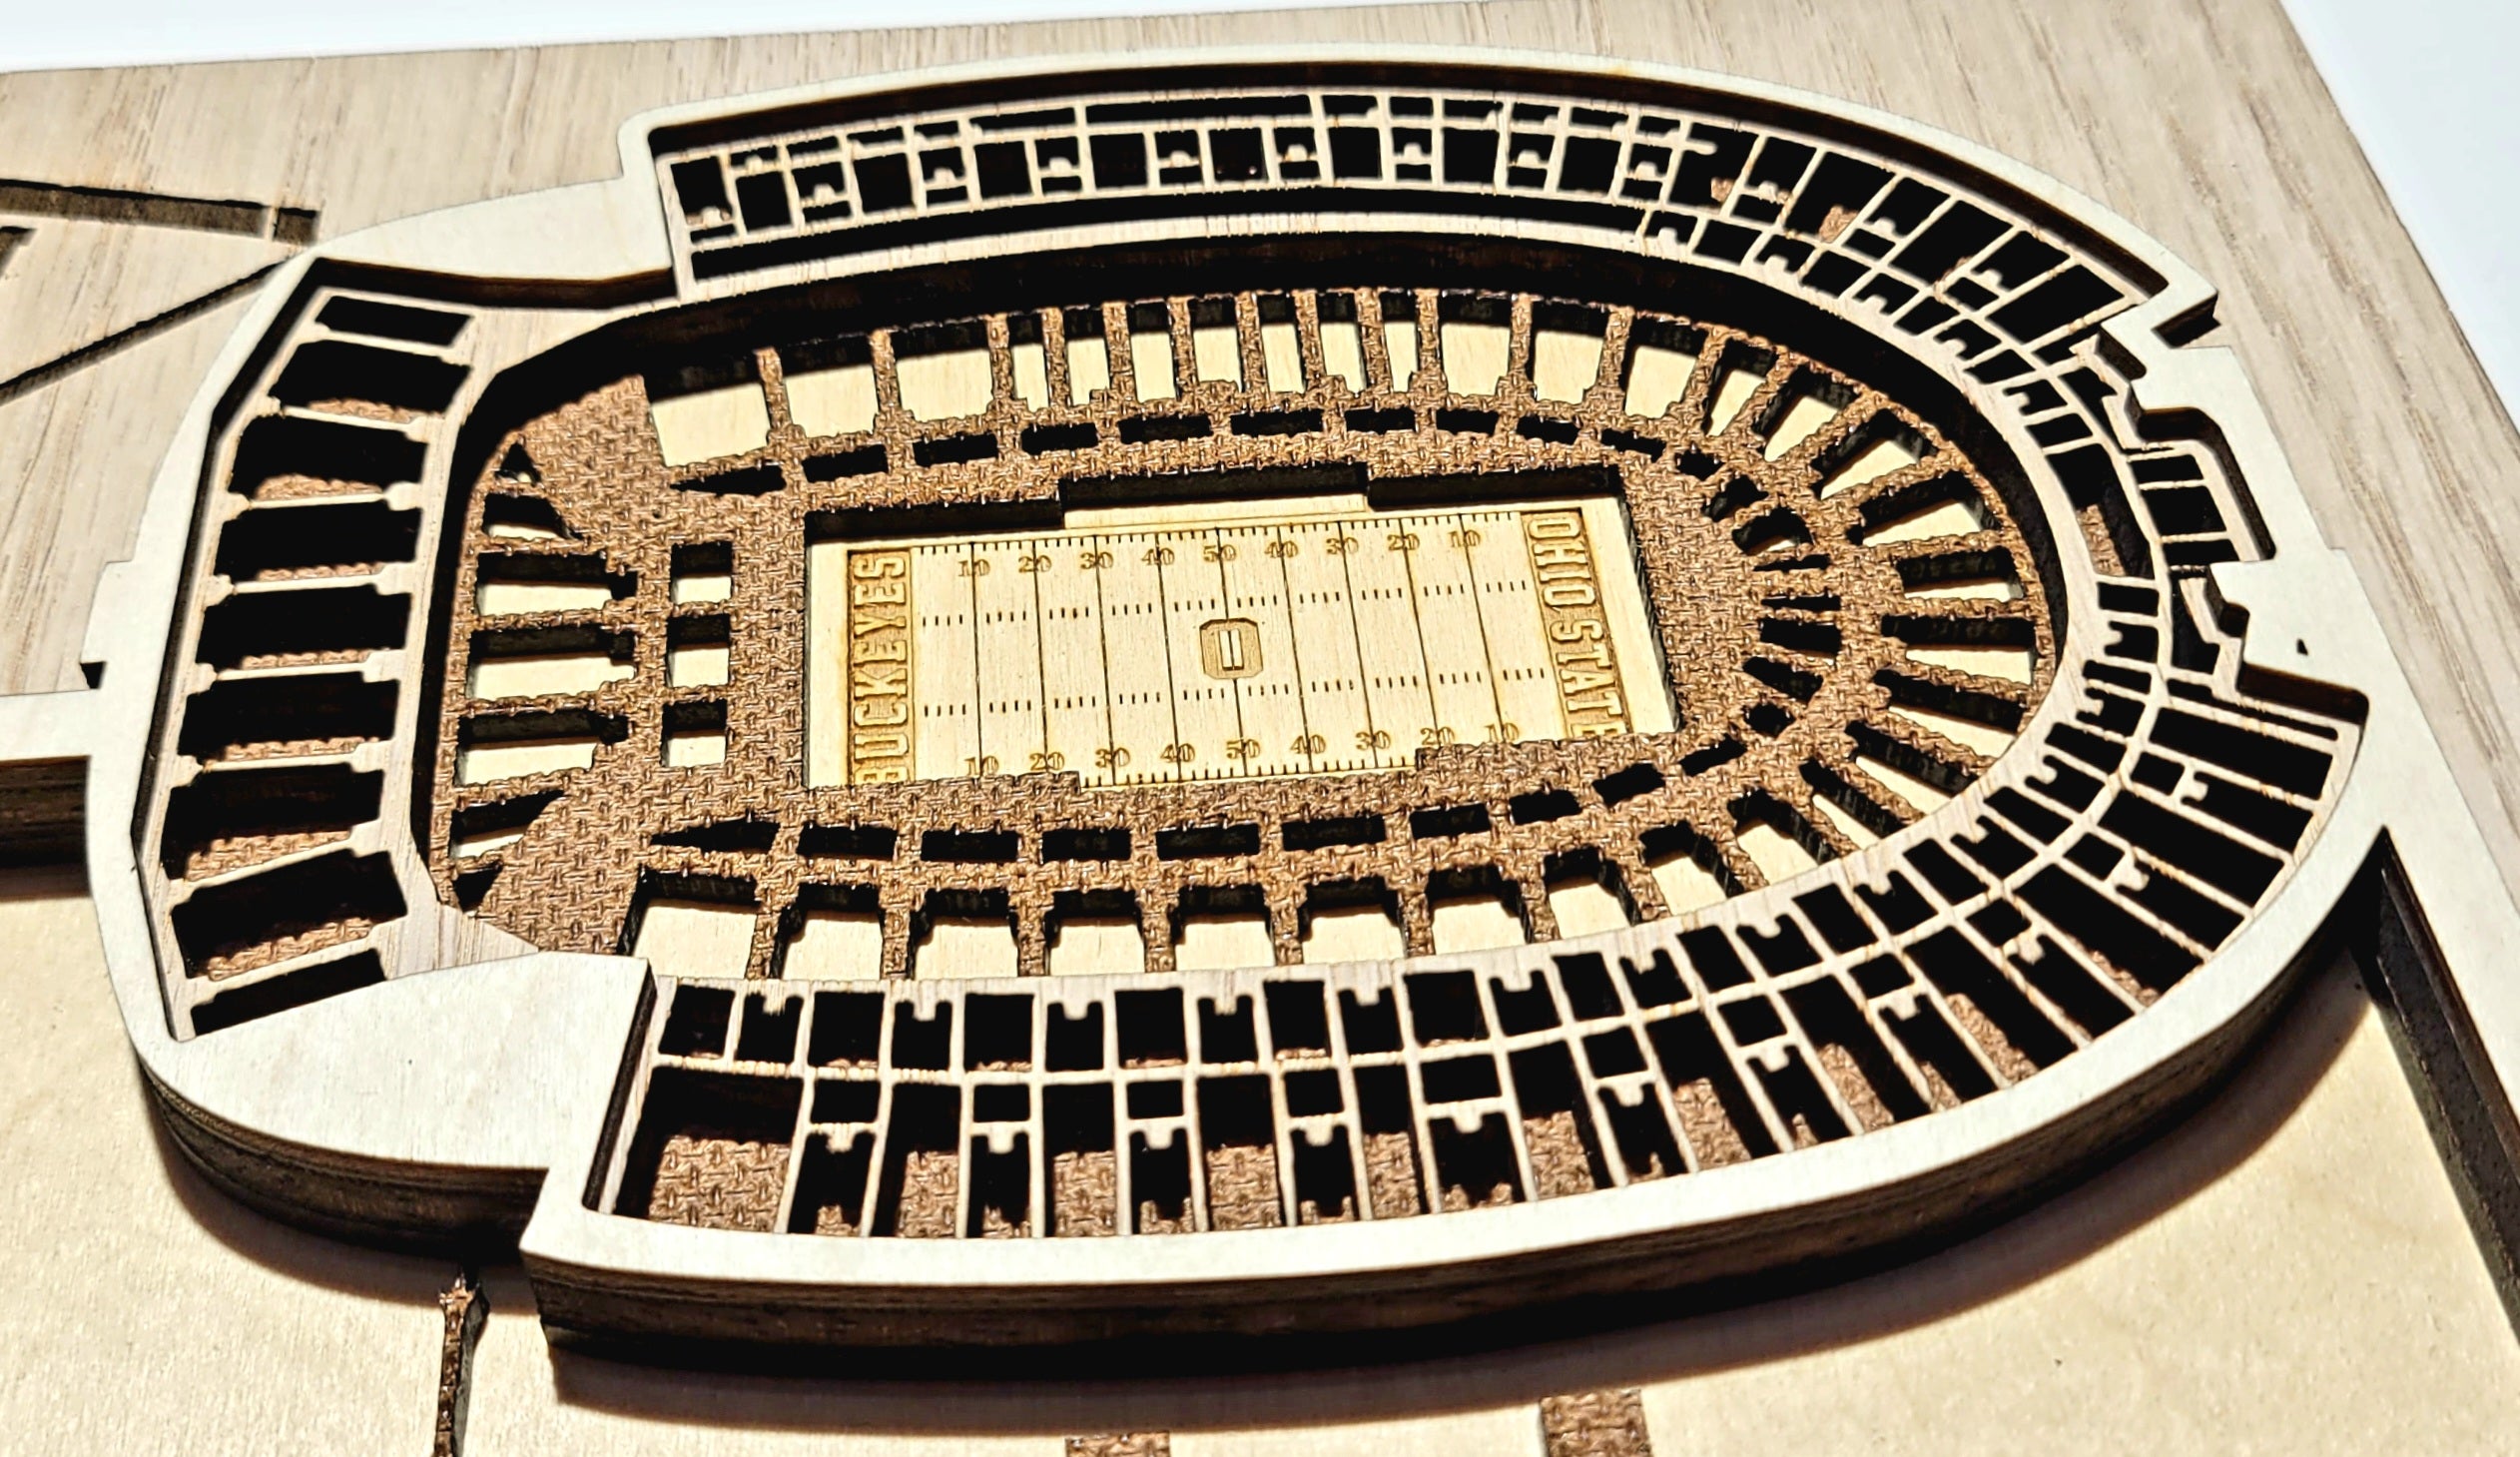 Ohio Stadium - Home of the Ohio State Buckeyes